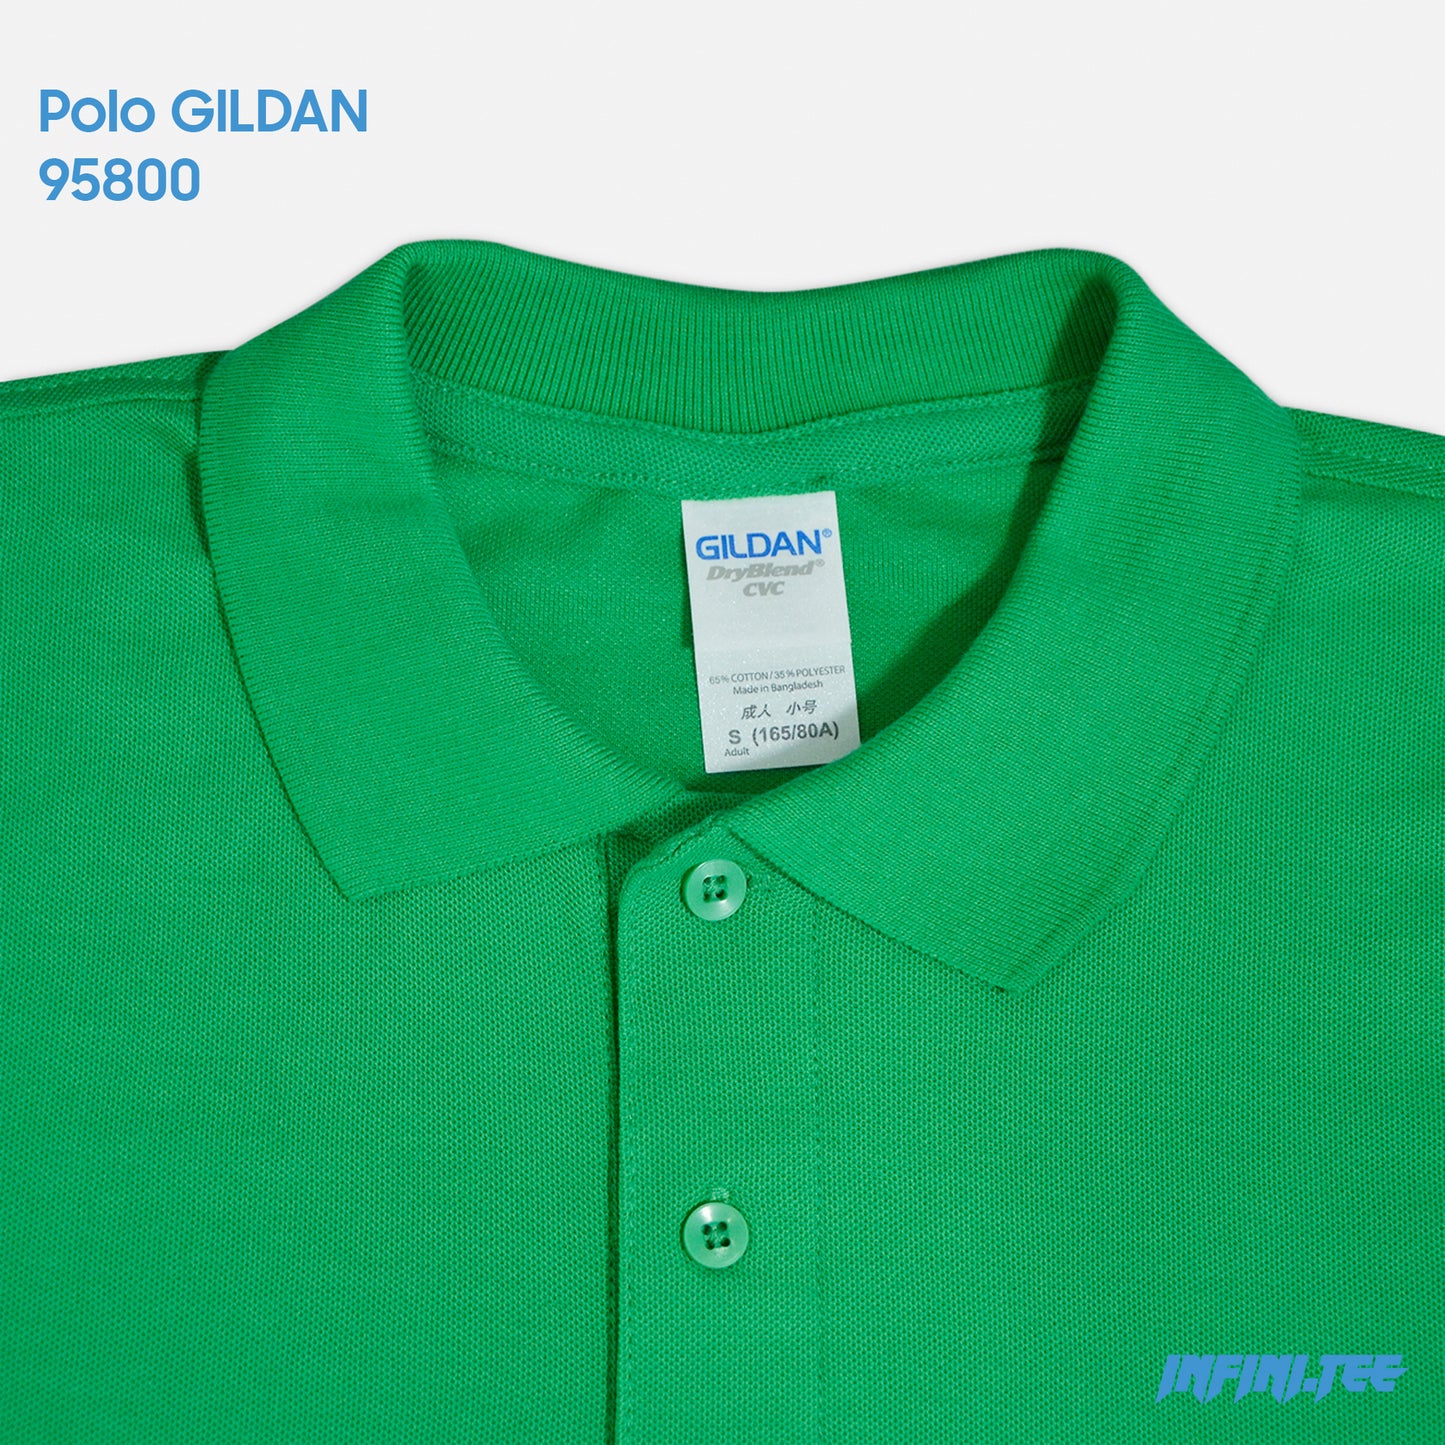 POLO 95800 GILDAN - IRISH GREEN